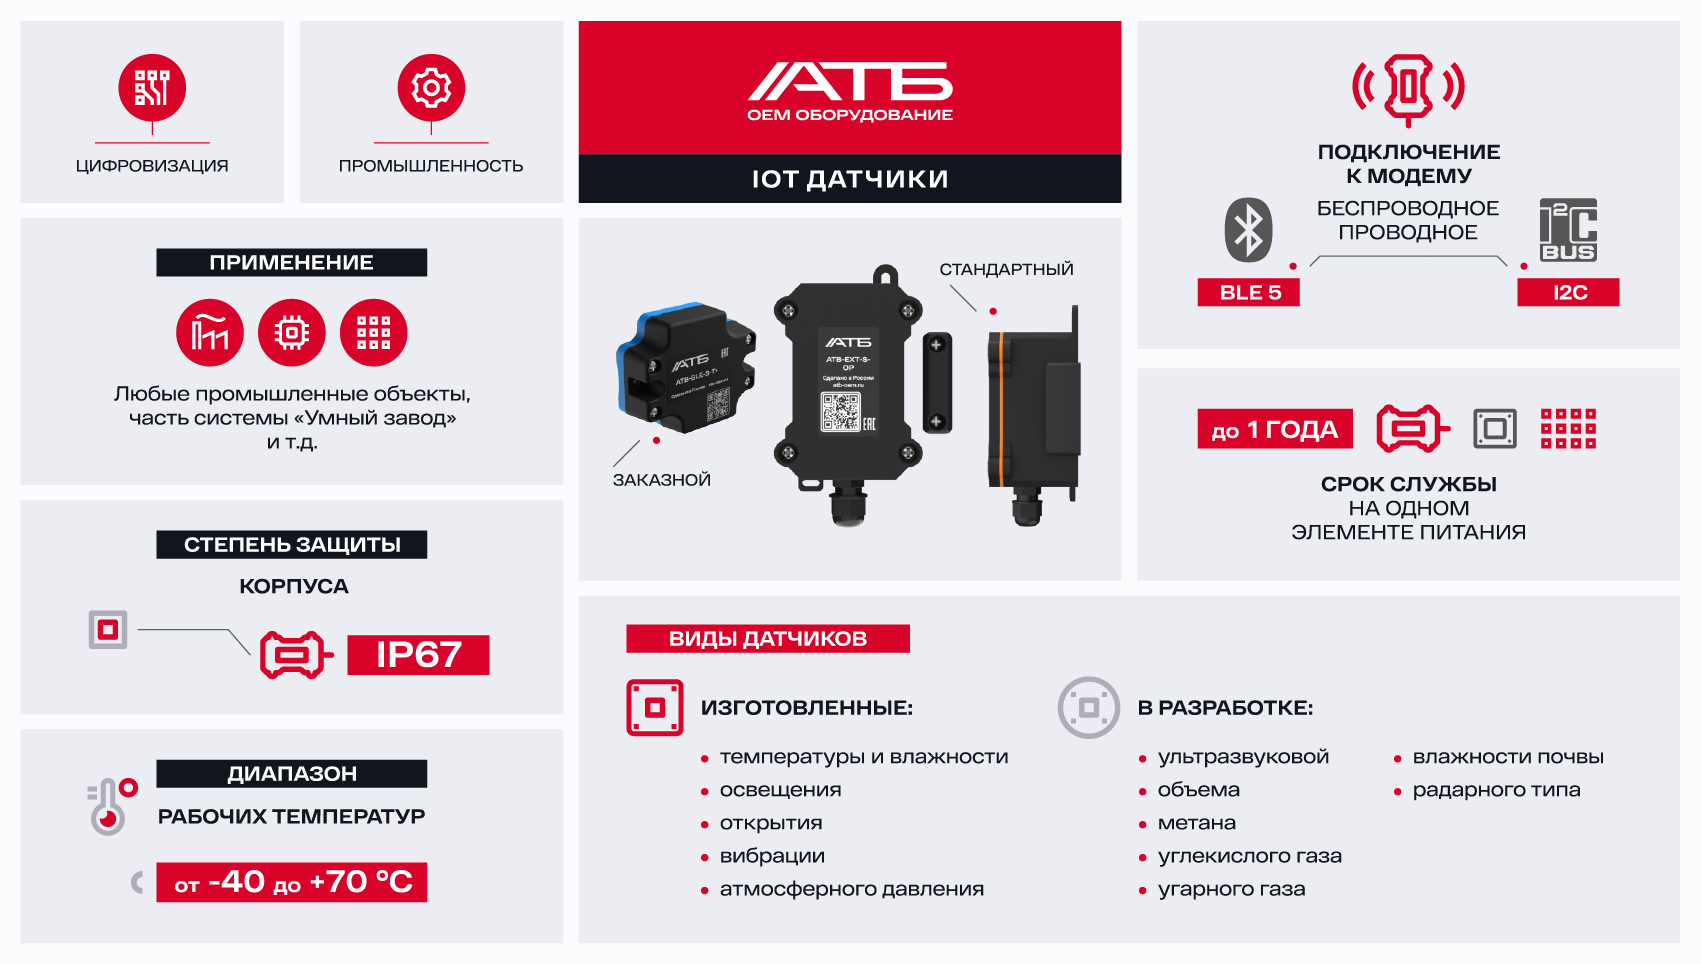 ATB-EXT-S-R Датчик радарного типа I2C